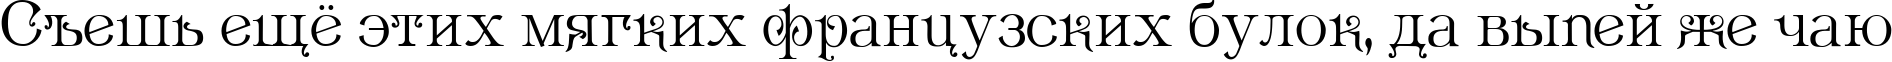 Пример написания шрифтом Ametist текста на русском